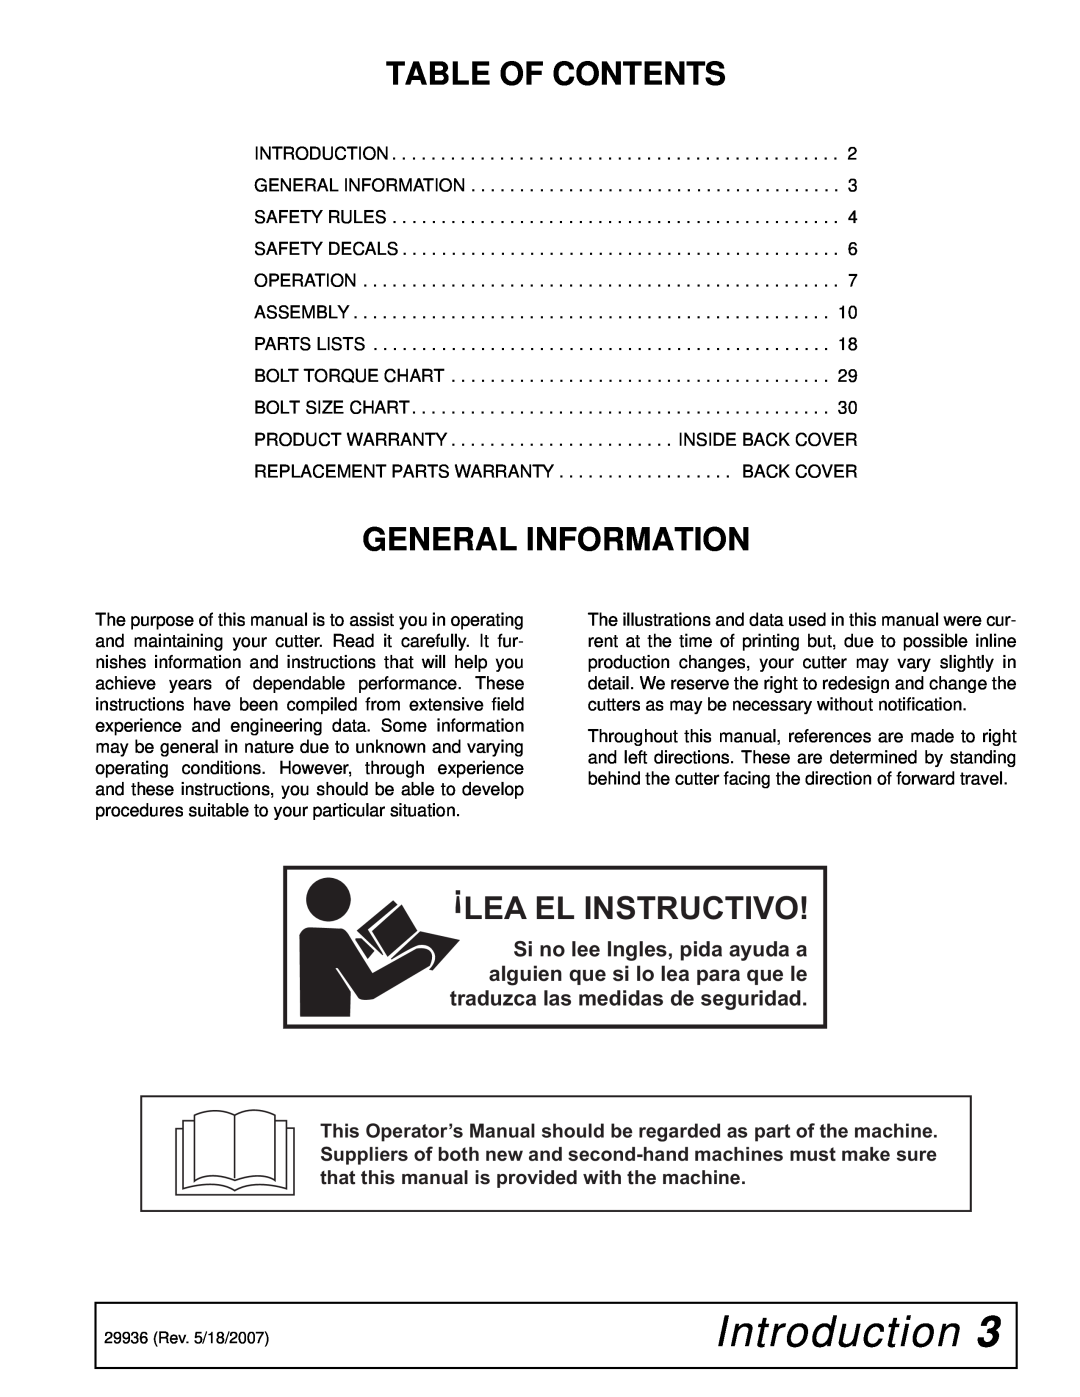 Woods Equipment L59, L36 manual Introduction, Table Of Contents, General Information, Lea El Instructivo 